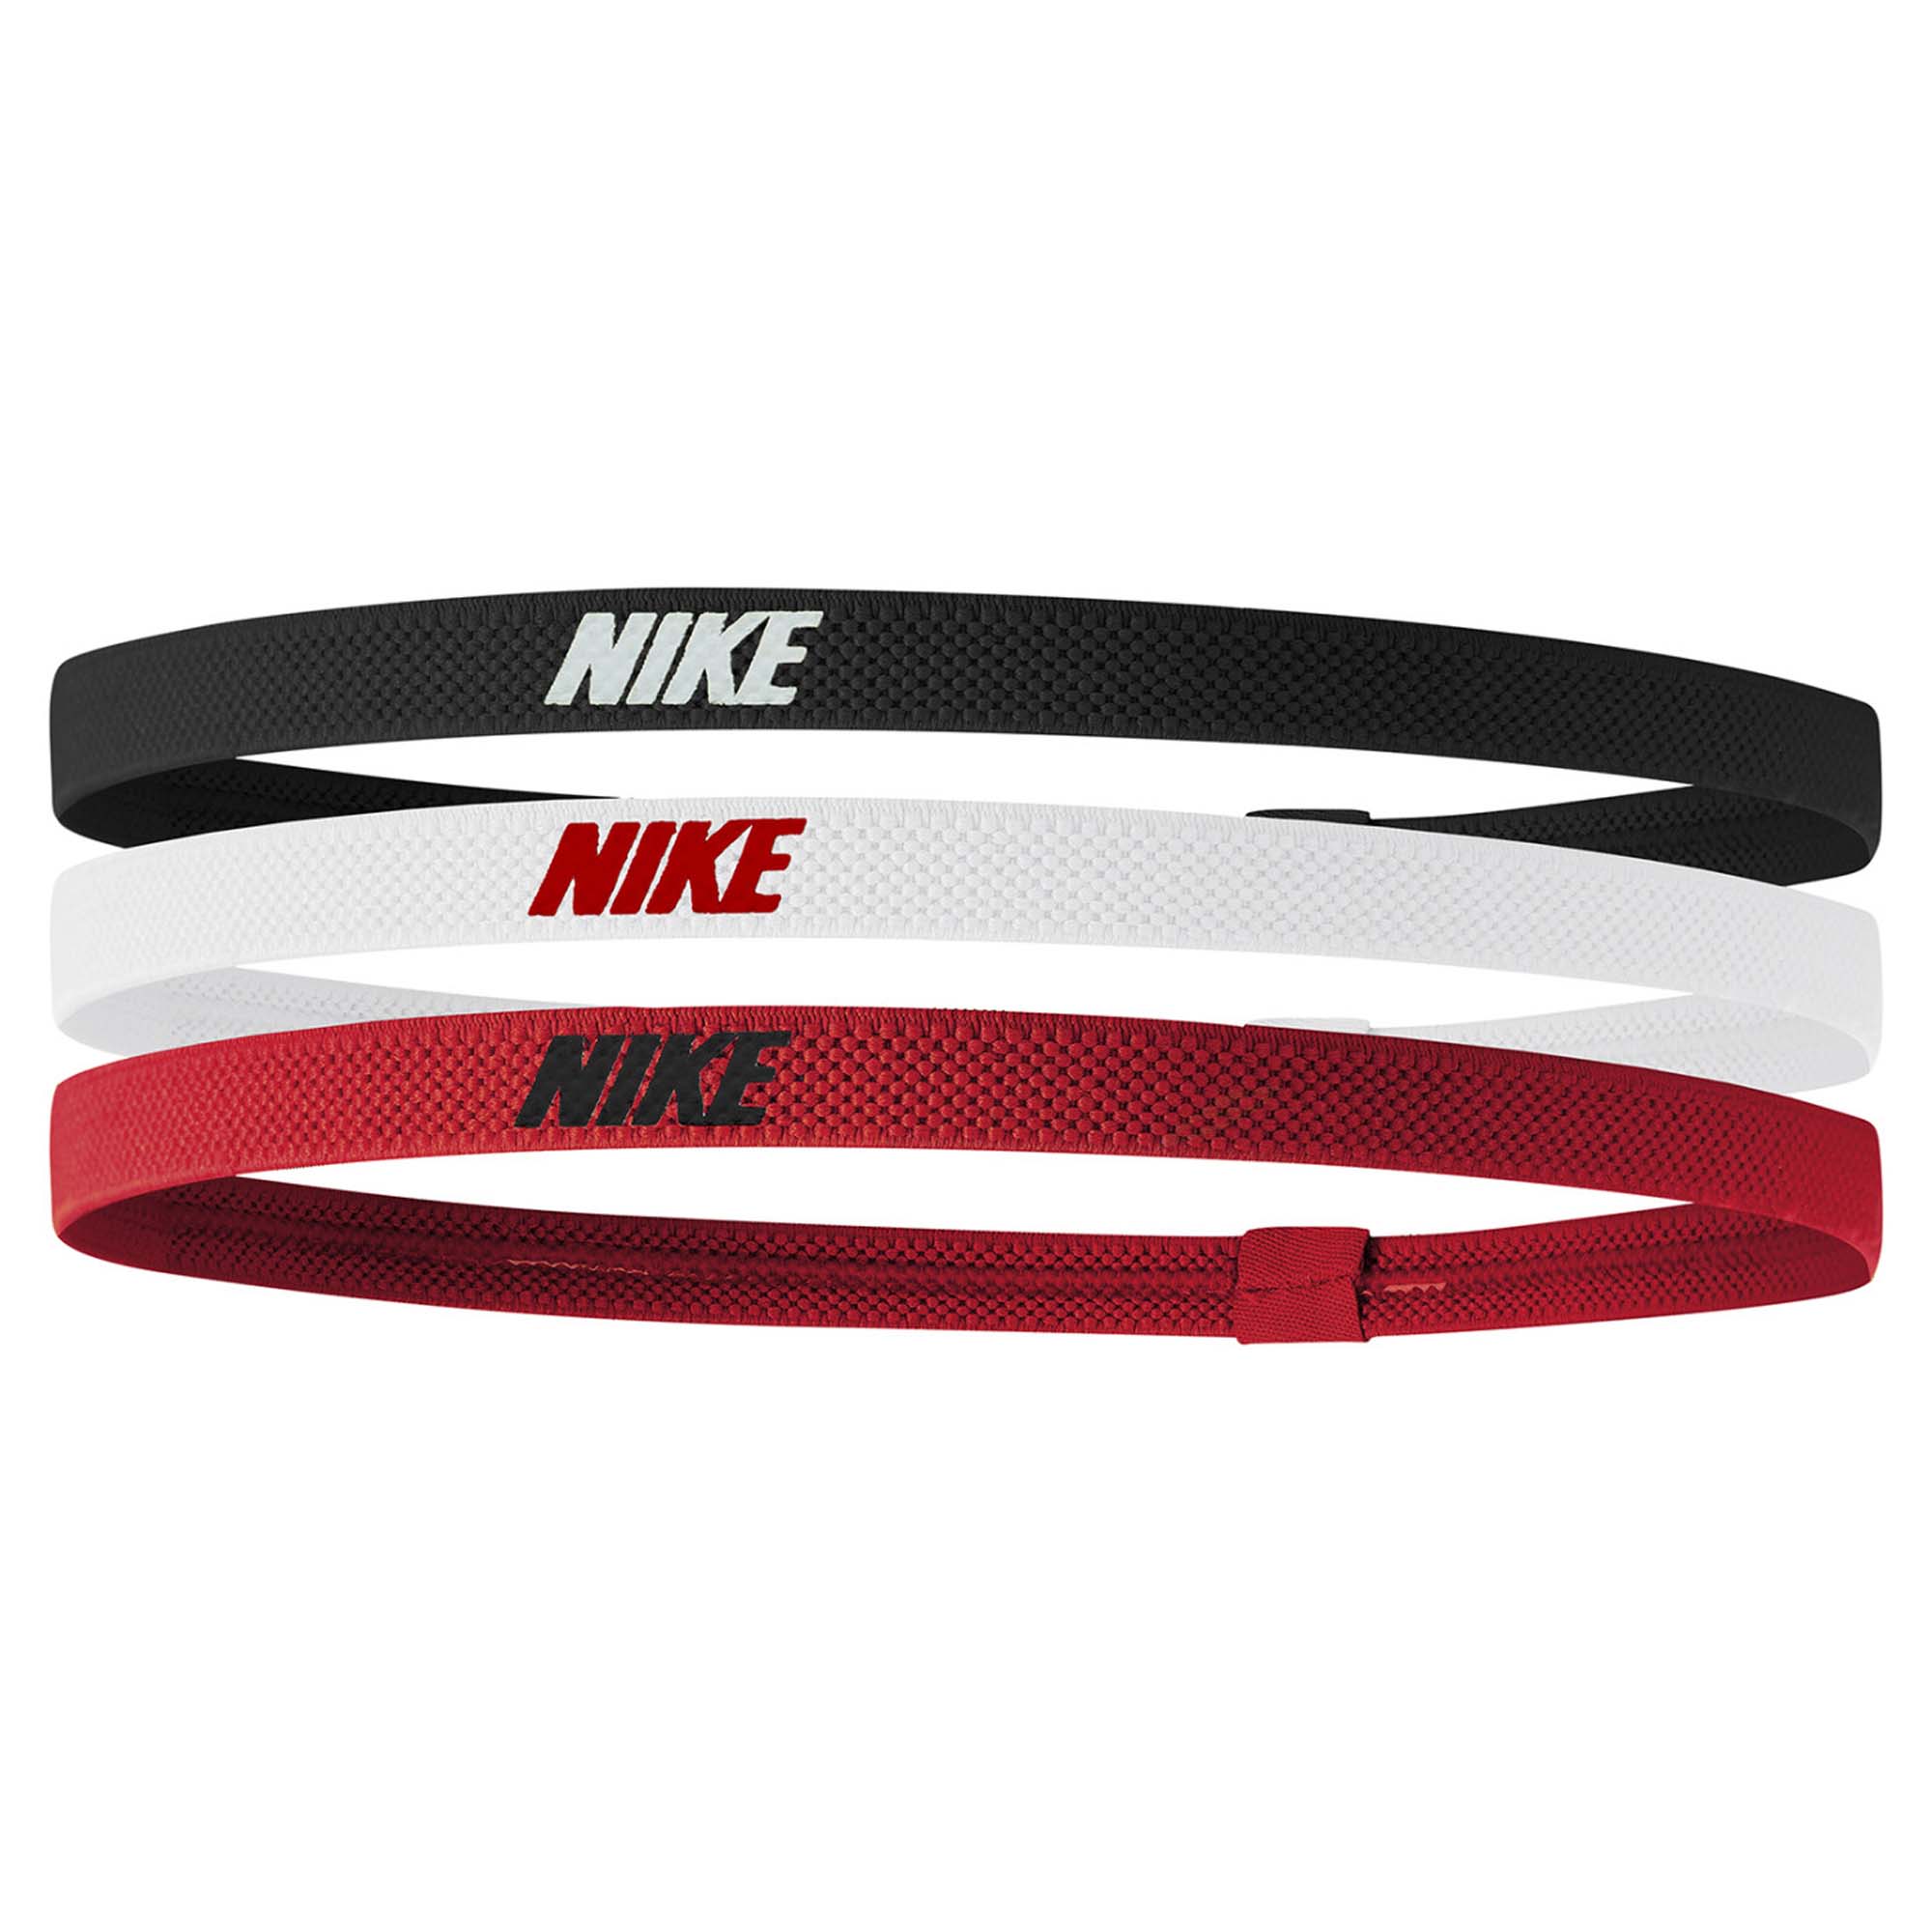 Nike accessoires nike elastic headbands 2.0 3 pk